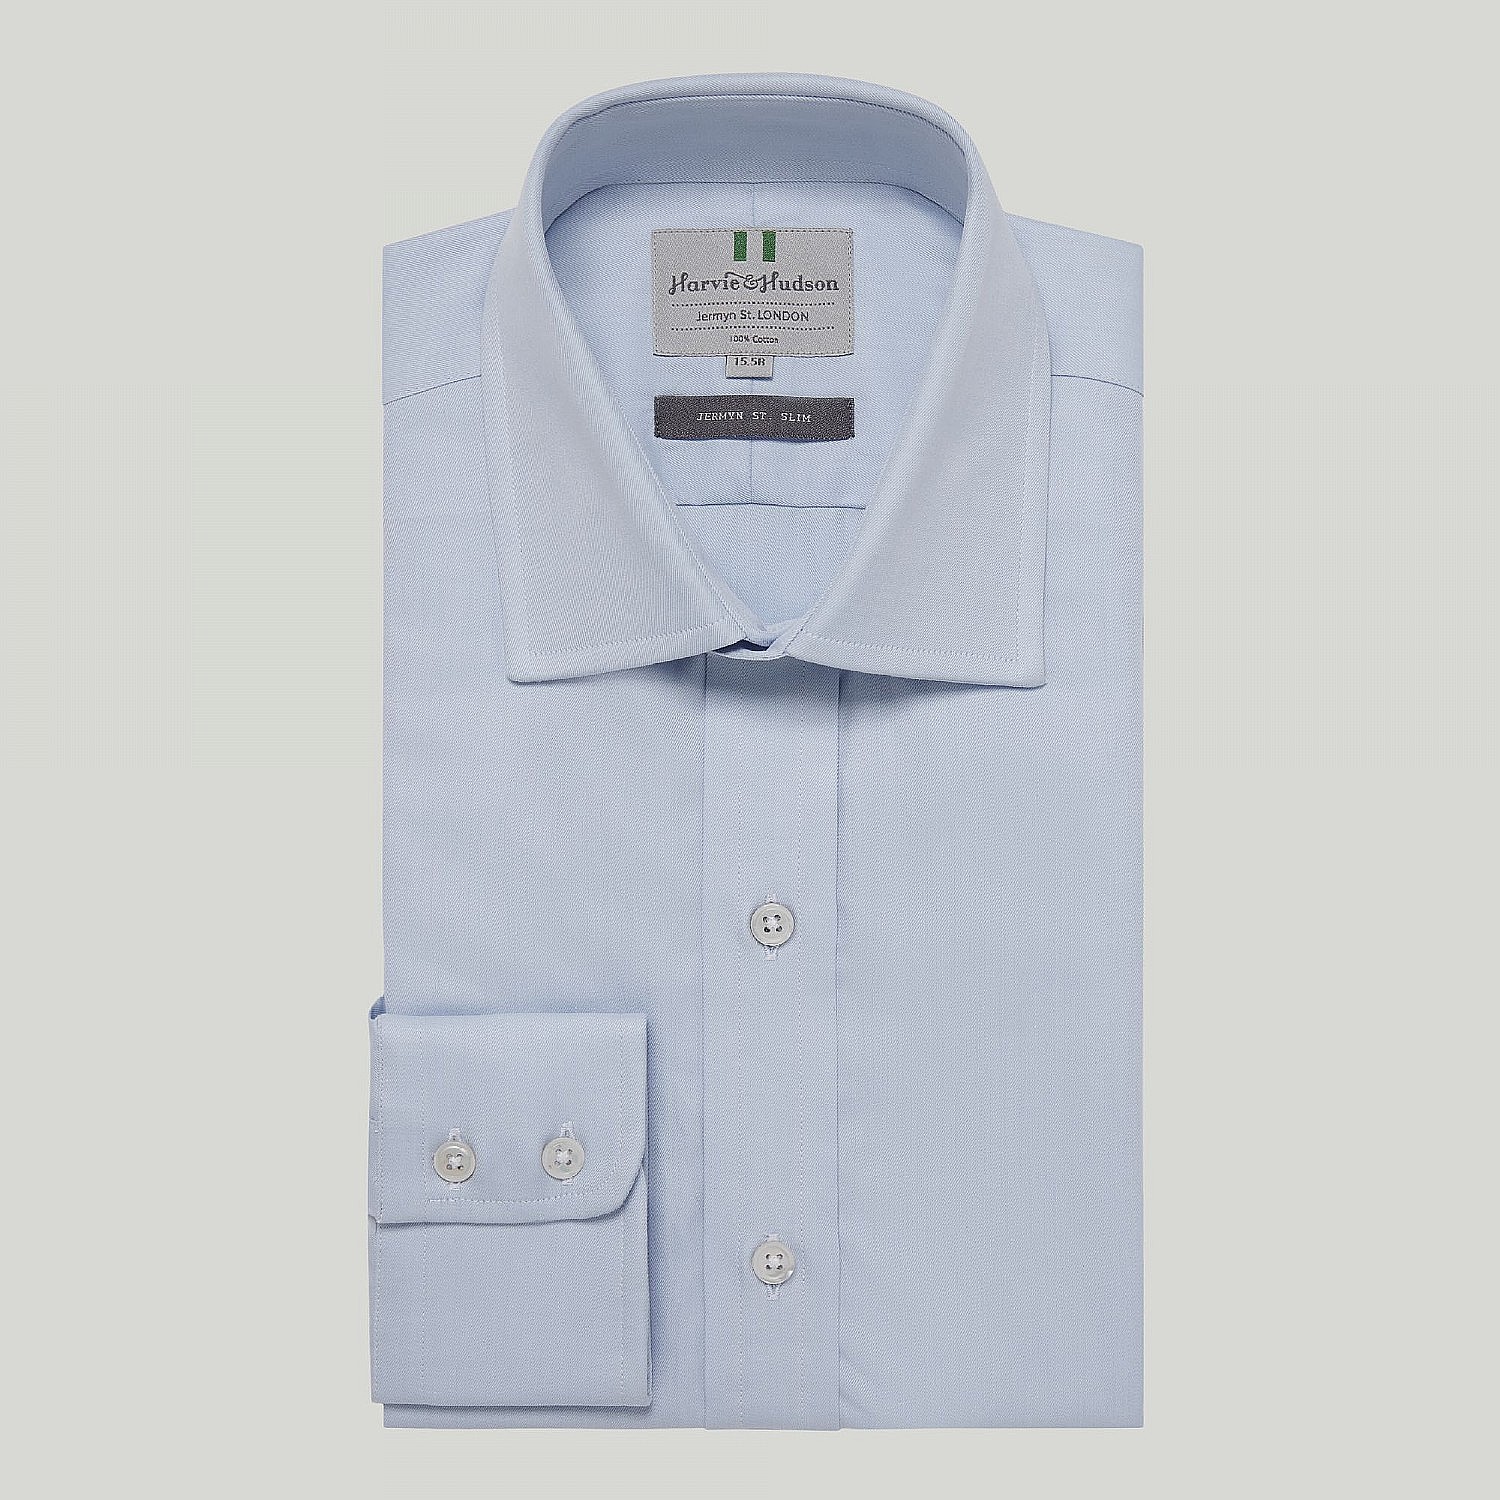 Classic Collar 2 Button Cuff Shirt in a Plain Grey Twill Cott Contemporary Fit